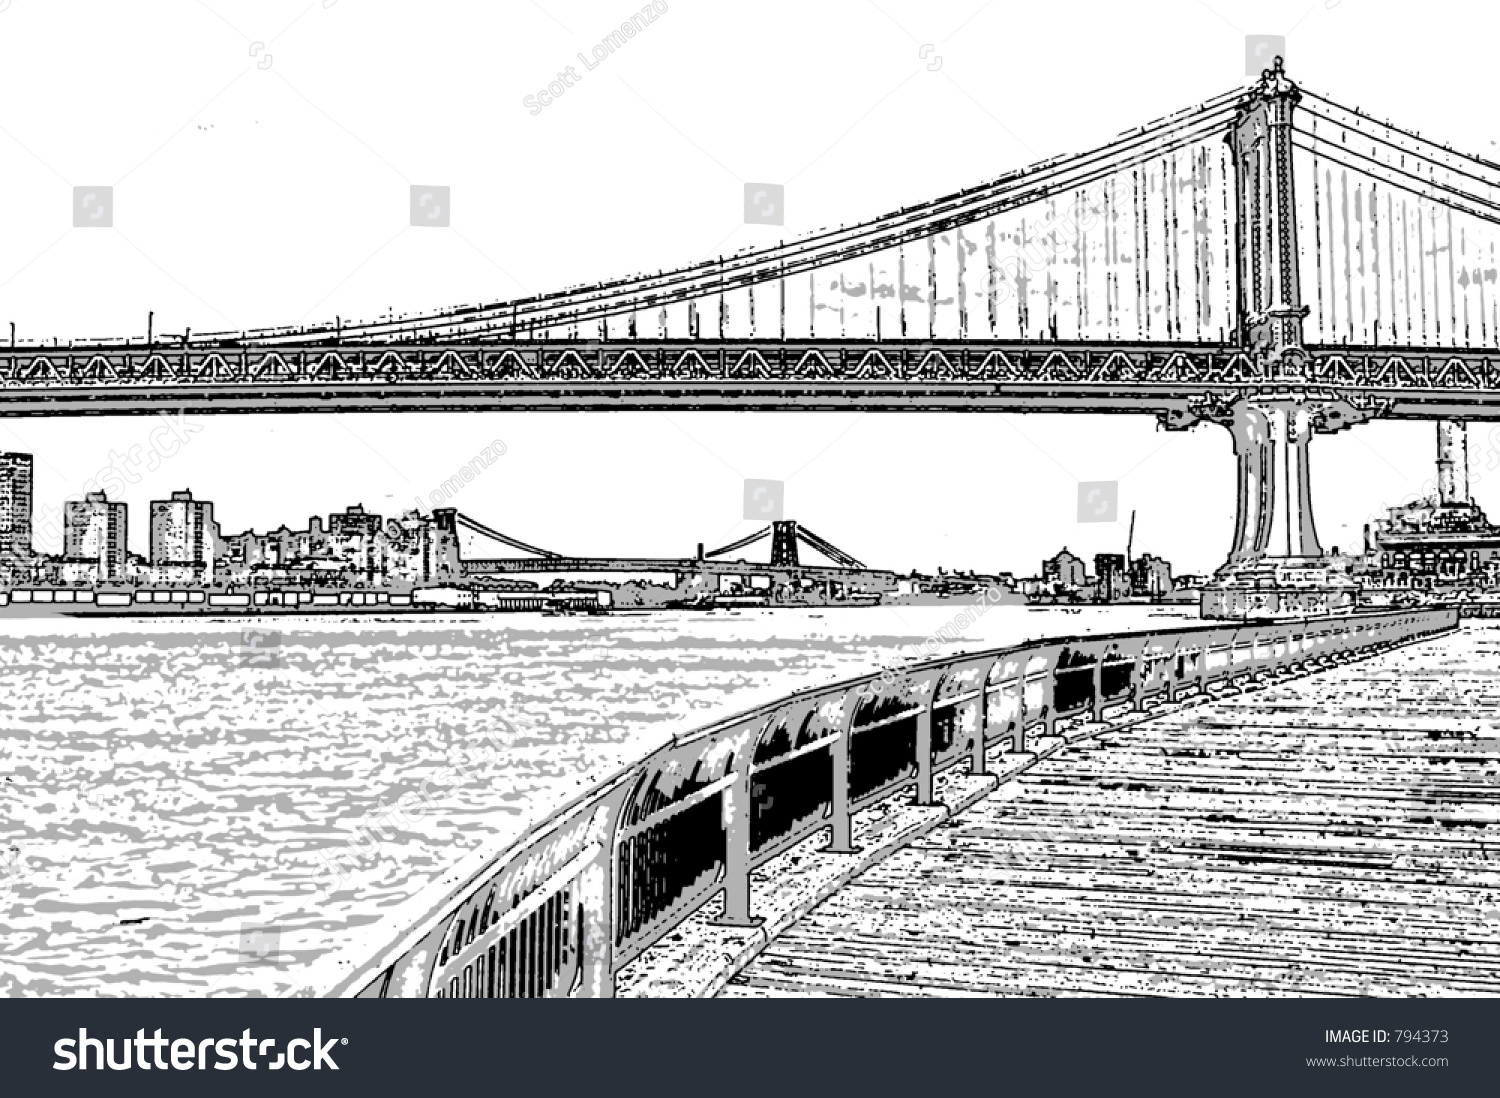 Manhattan Bridge Illustration - 794373 : Shutterstock